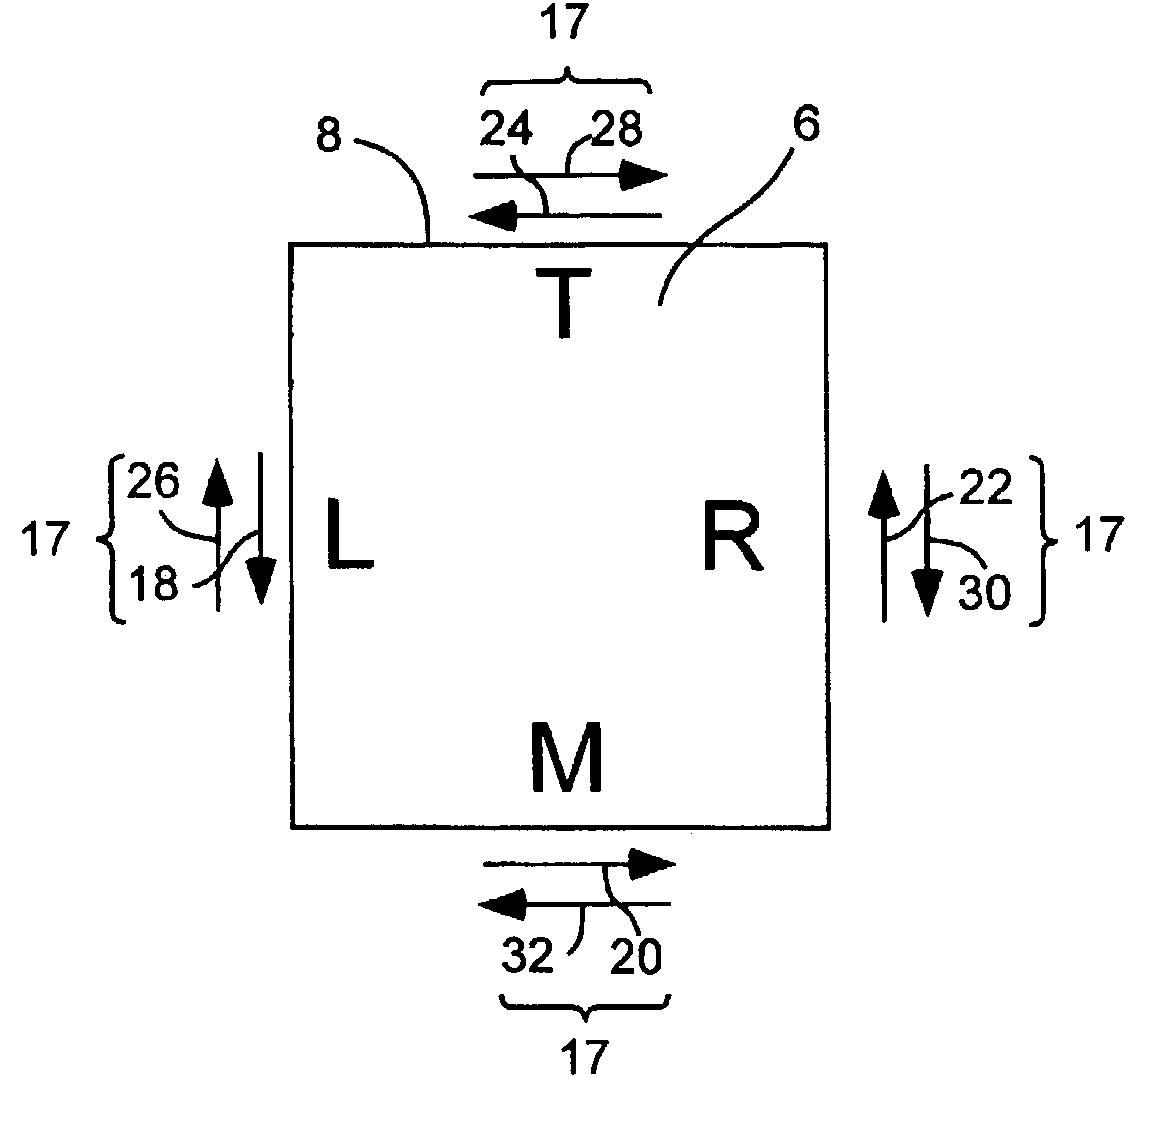 Symbol encoding apparatus and method